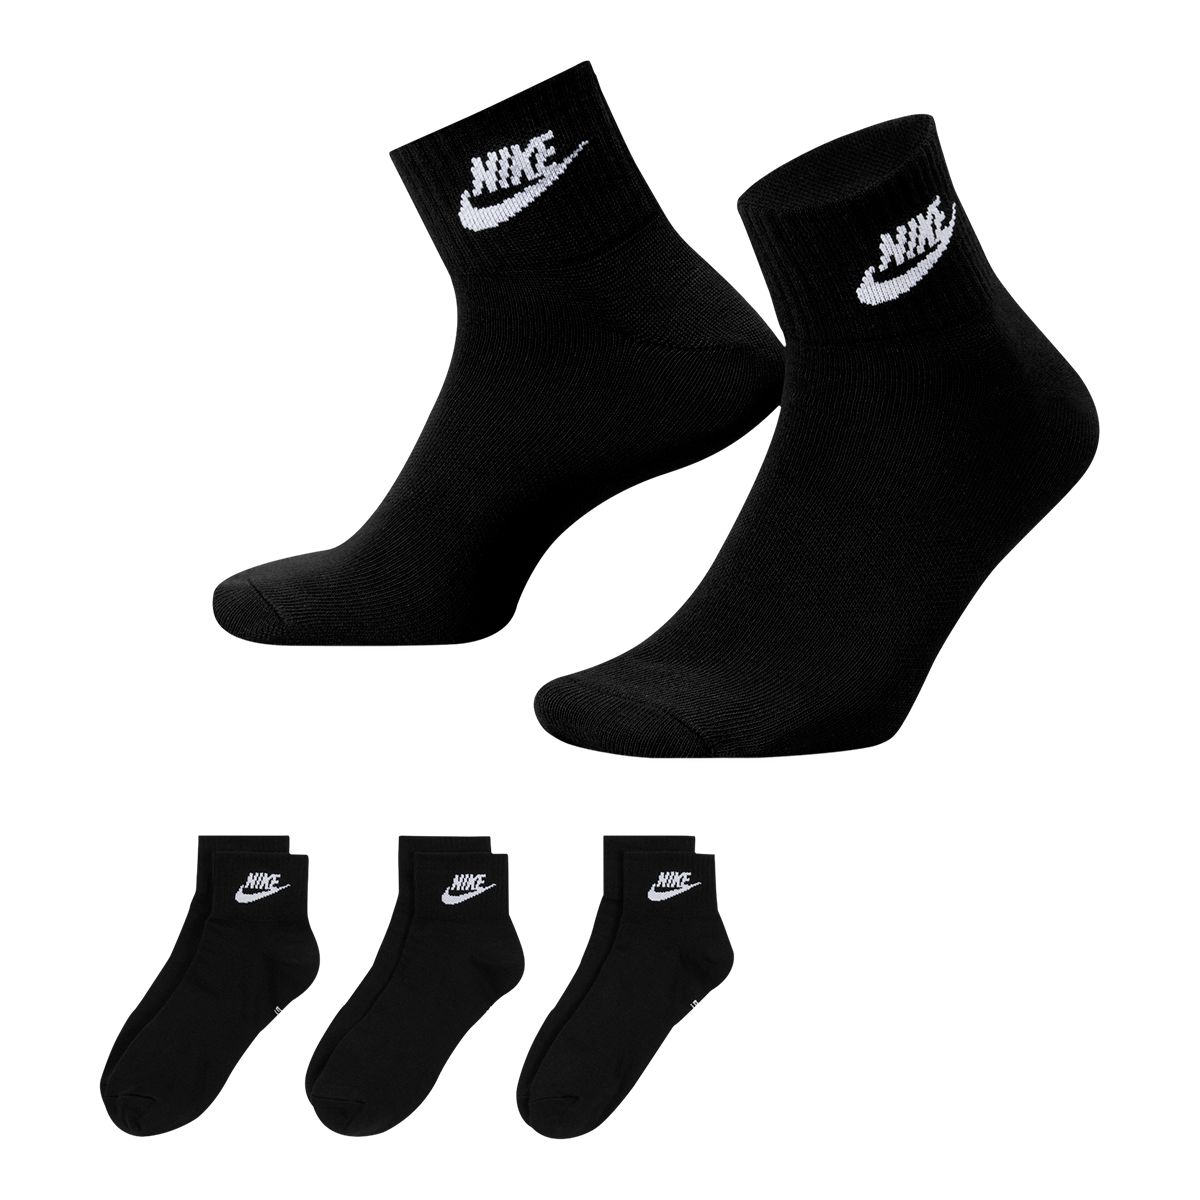 Nike Sportswear Women's Everyday Essential Ankle Socks - 3 Pack